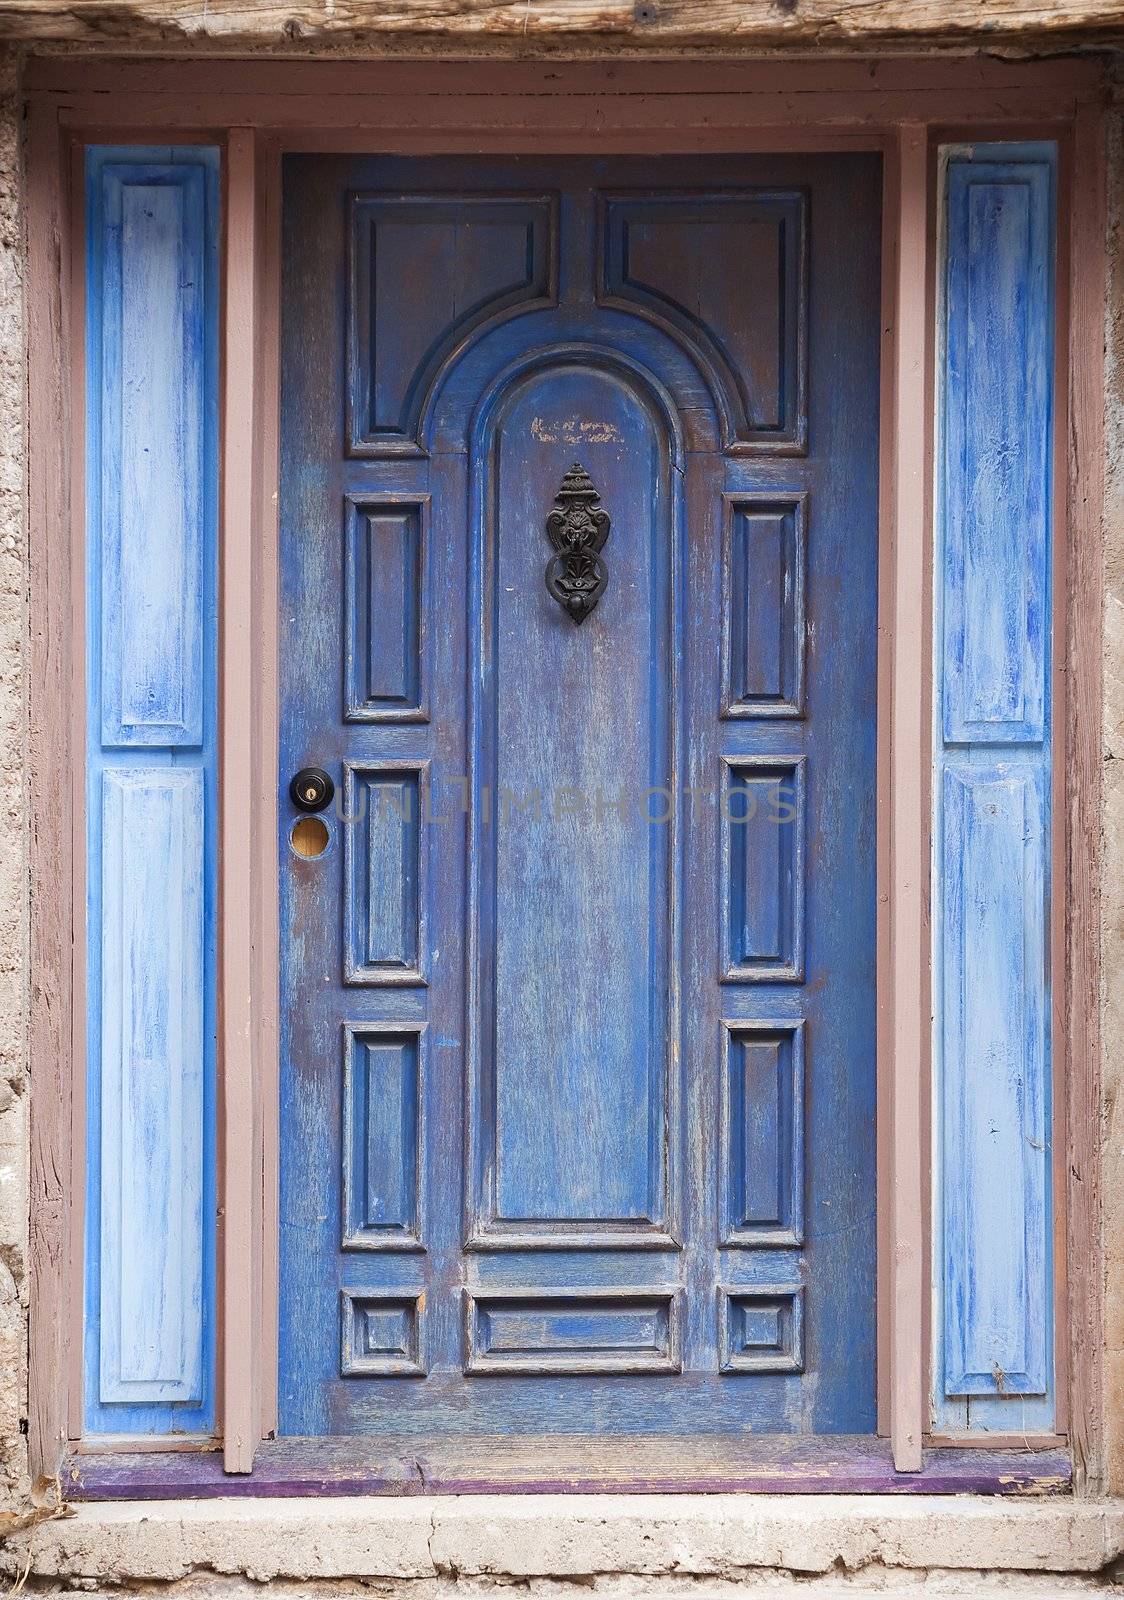 Old peeling blue door with metal knocker